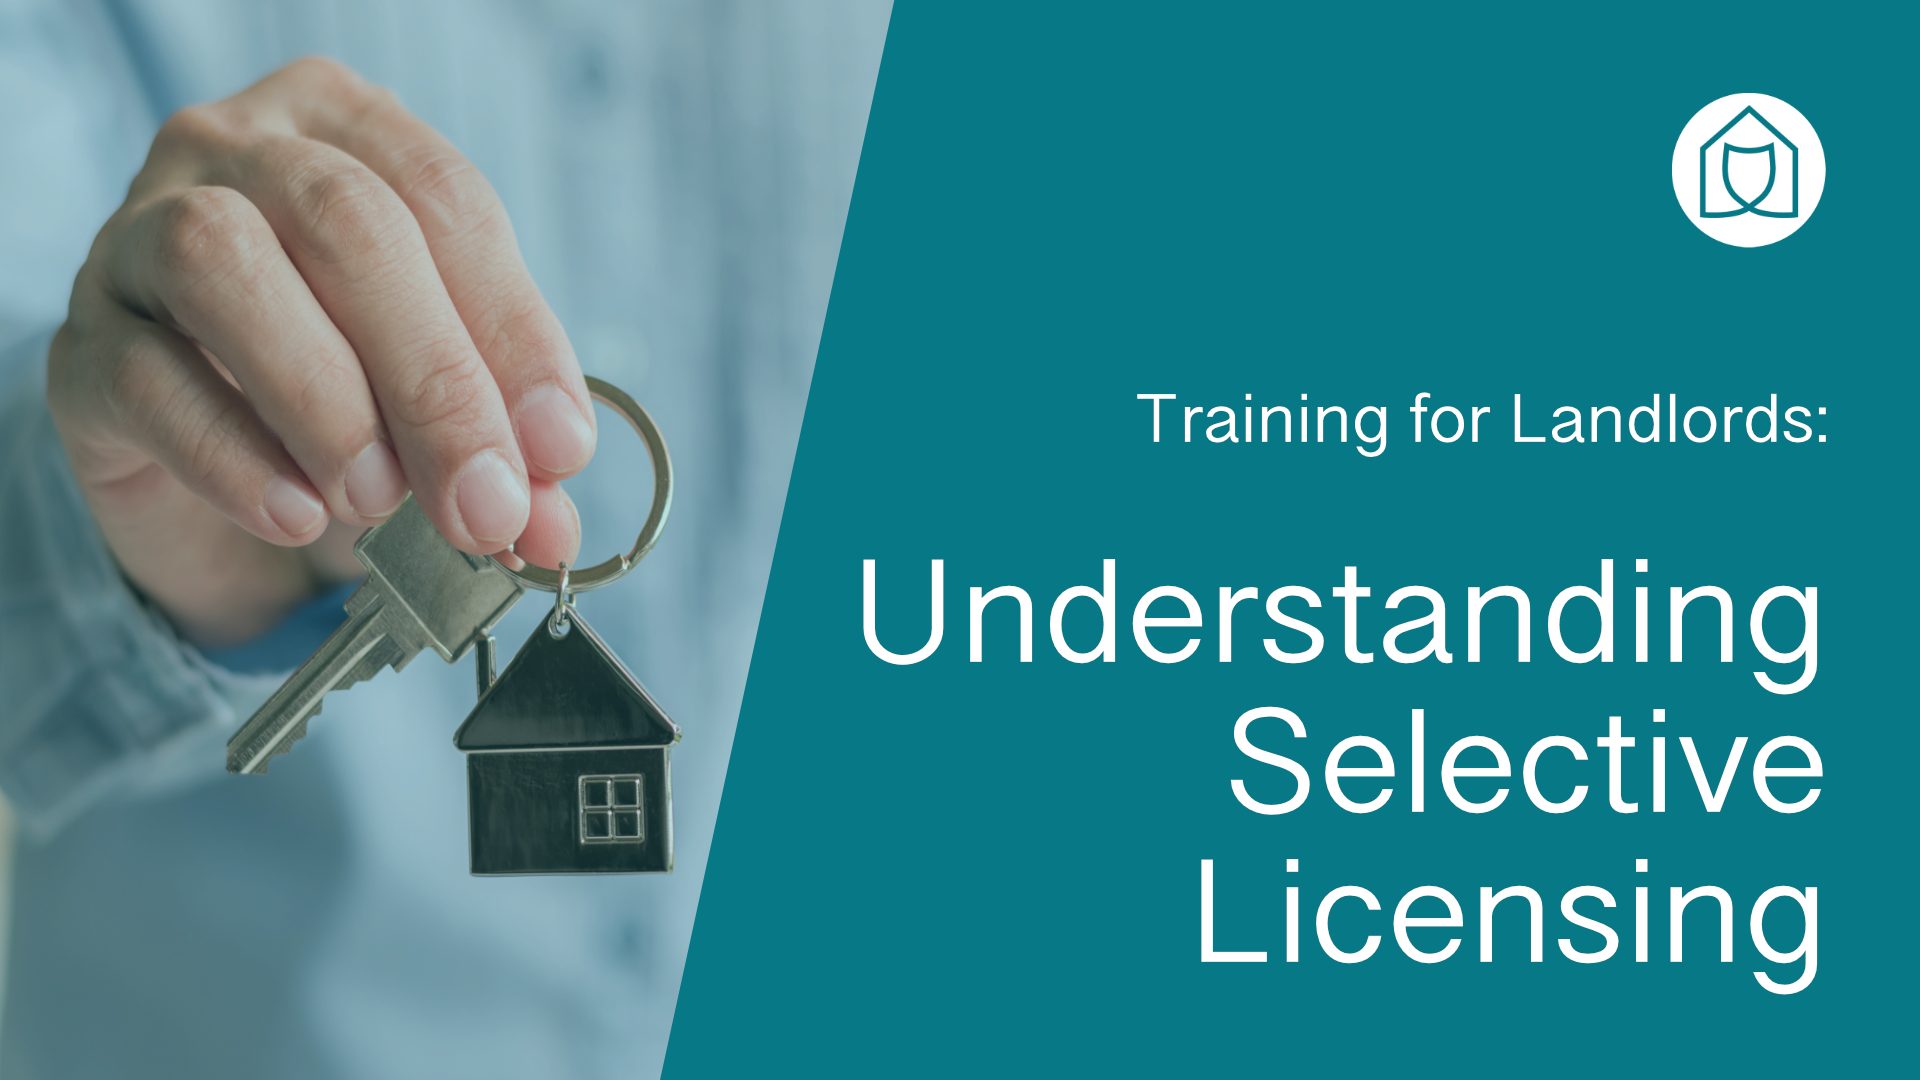 Training for Landlords: Understanding Selective Licensing